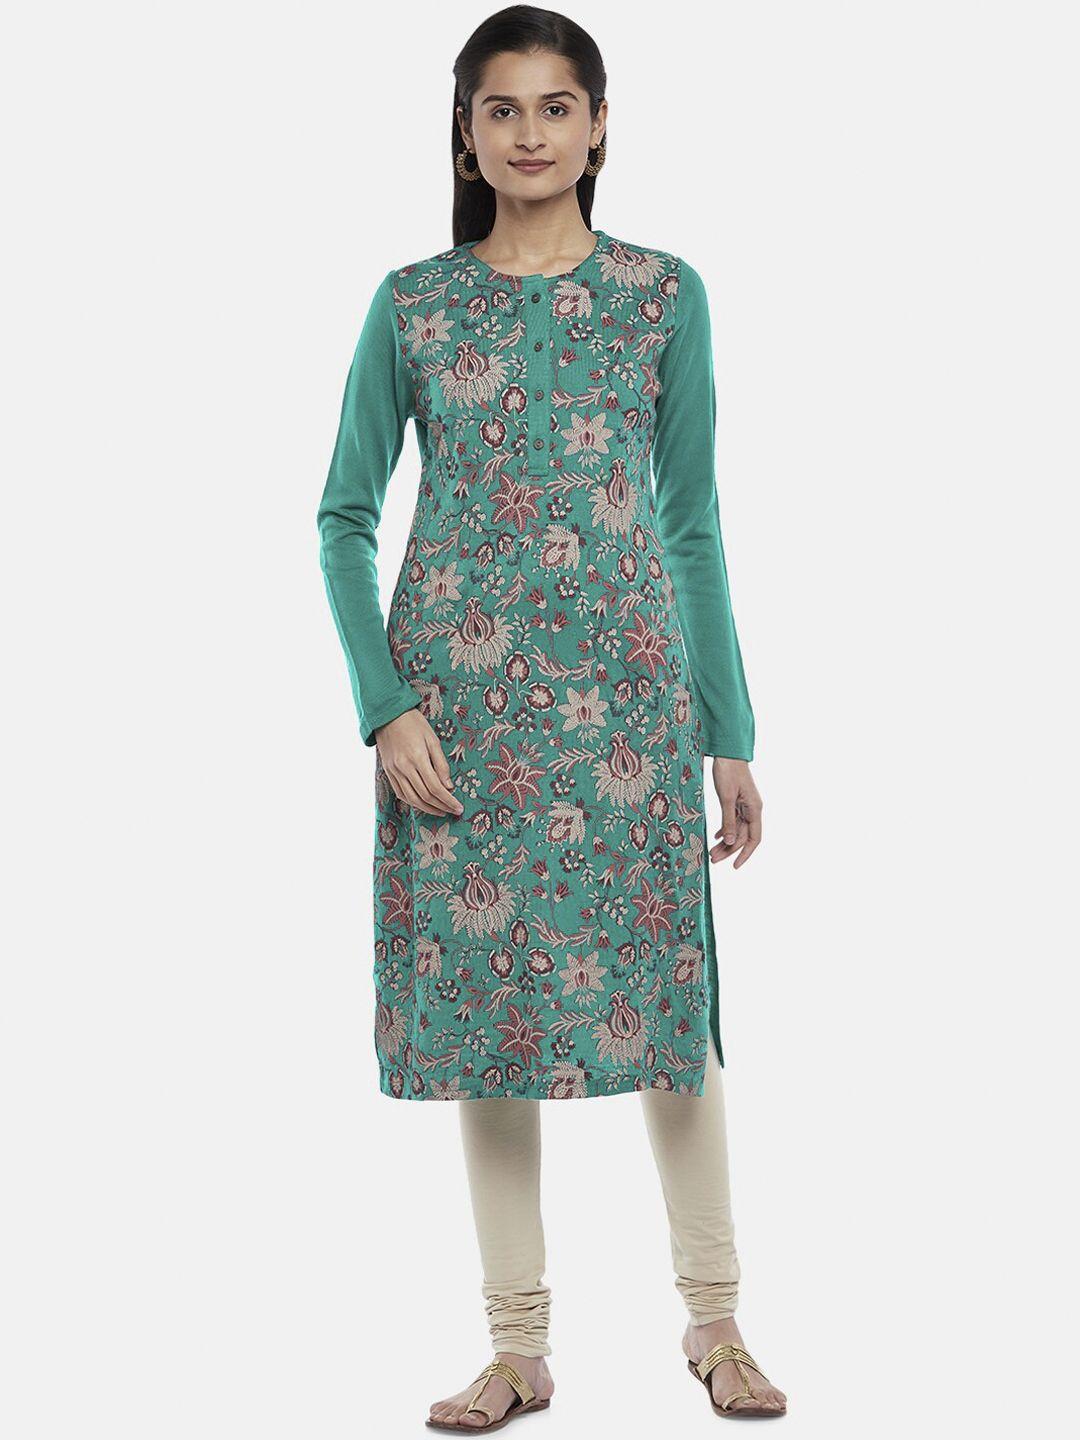 rangmanch by pantaloons women green floral printed kurta